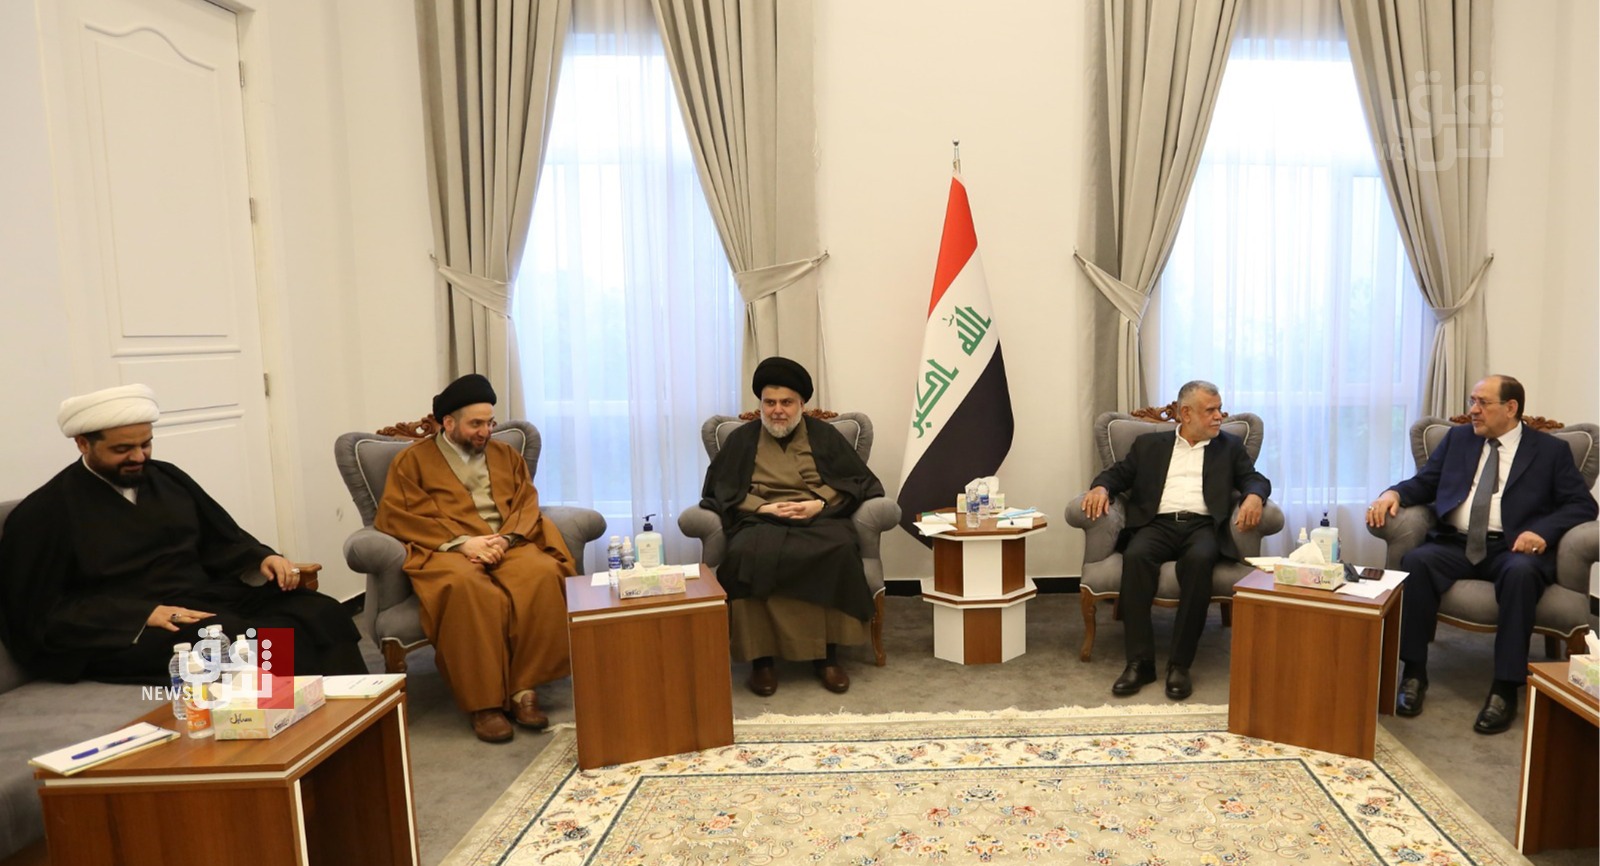 Sadrist Movement leader Muqtada al-Sadr in meeting with leaders of the Shite Coordination Framework at his headquarters in Al-Hananah, Najaf. (Photo: Muqtada al-Sadr's Media Office)